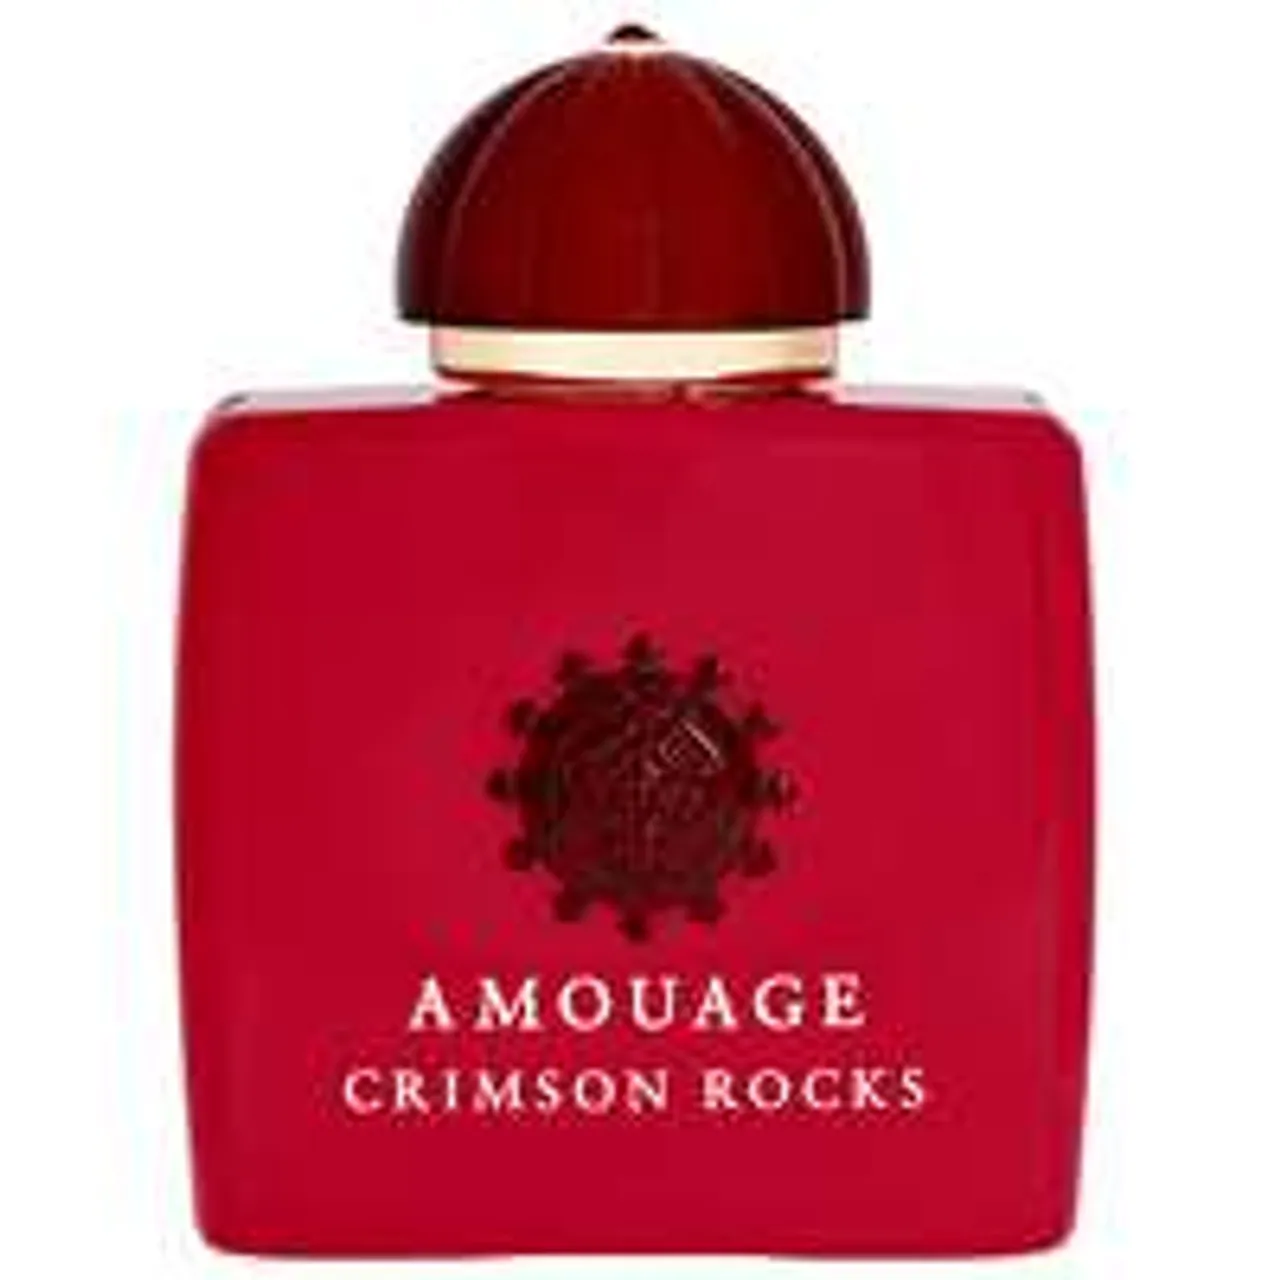 Amouage Crimson Rocks Eau de Parfum Spray 100ml